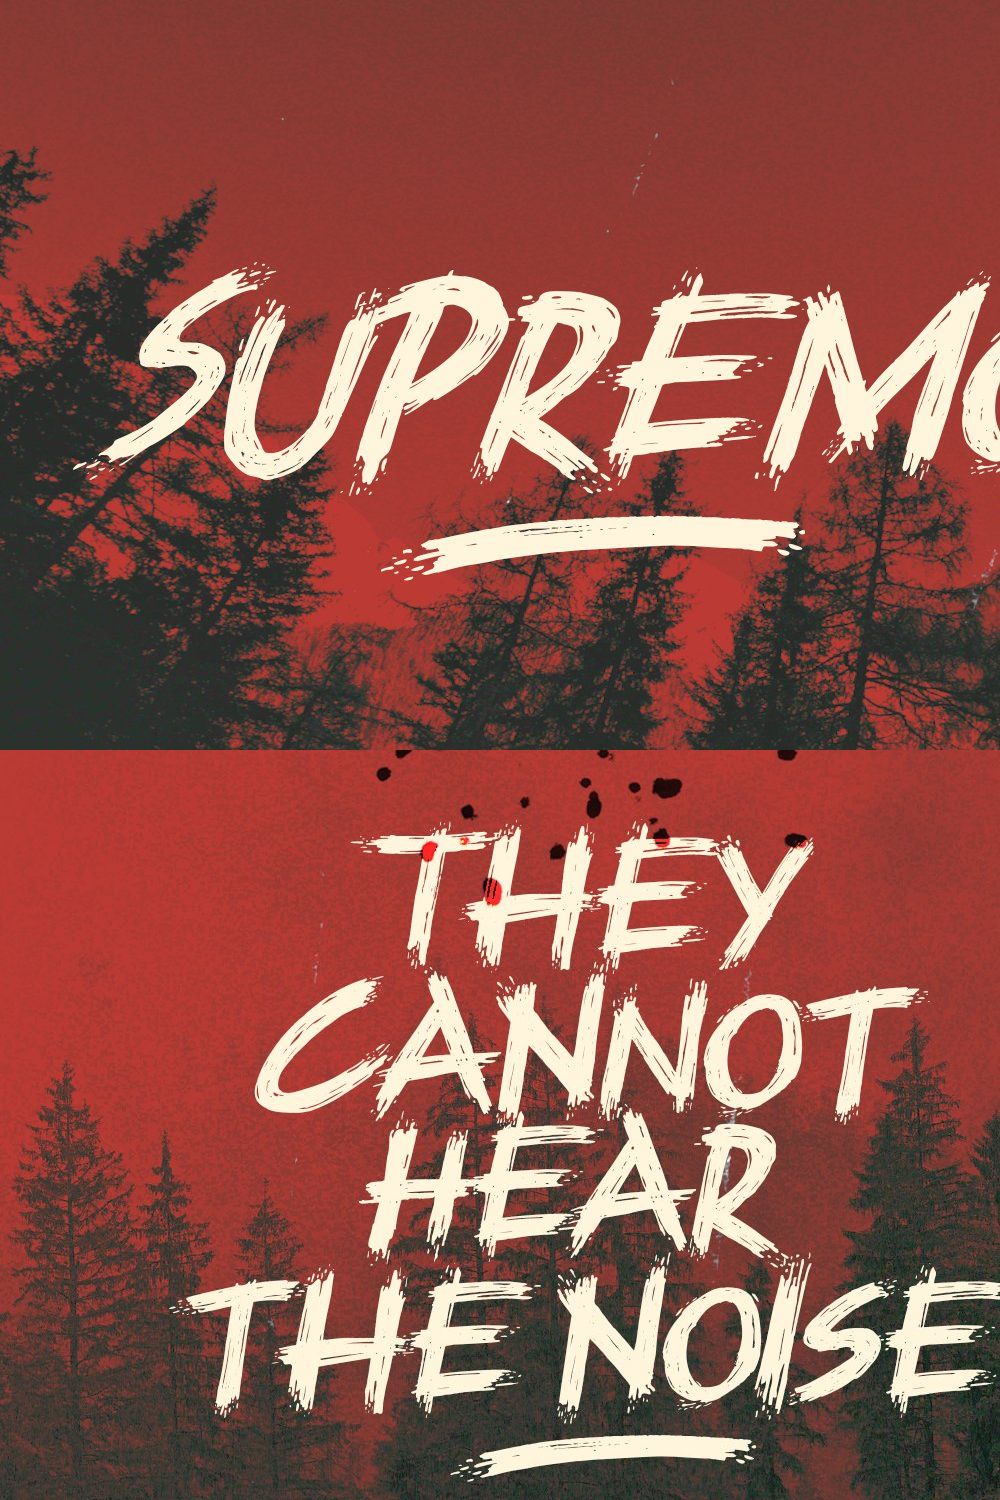 Supremo | Horror Font pinterest preview image.